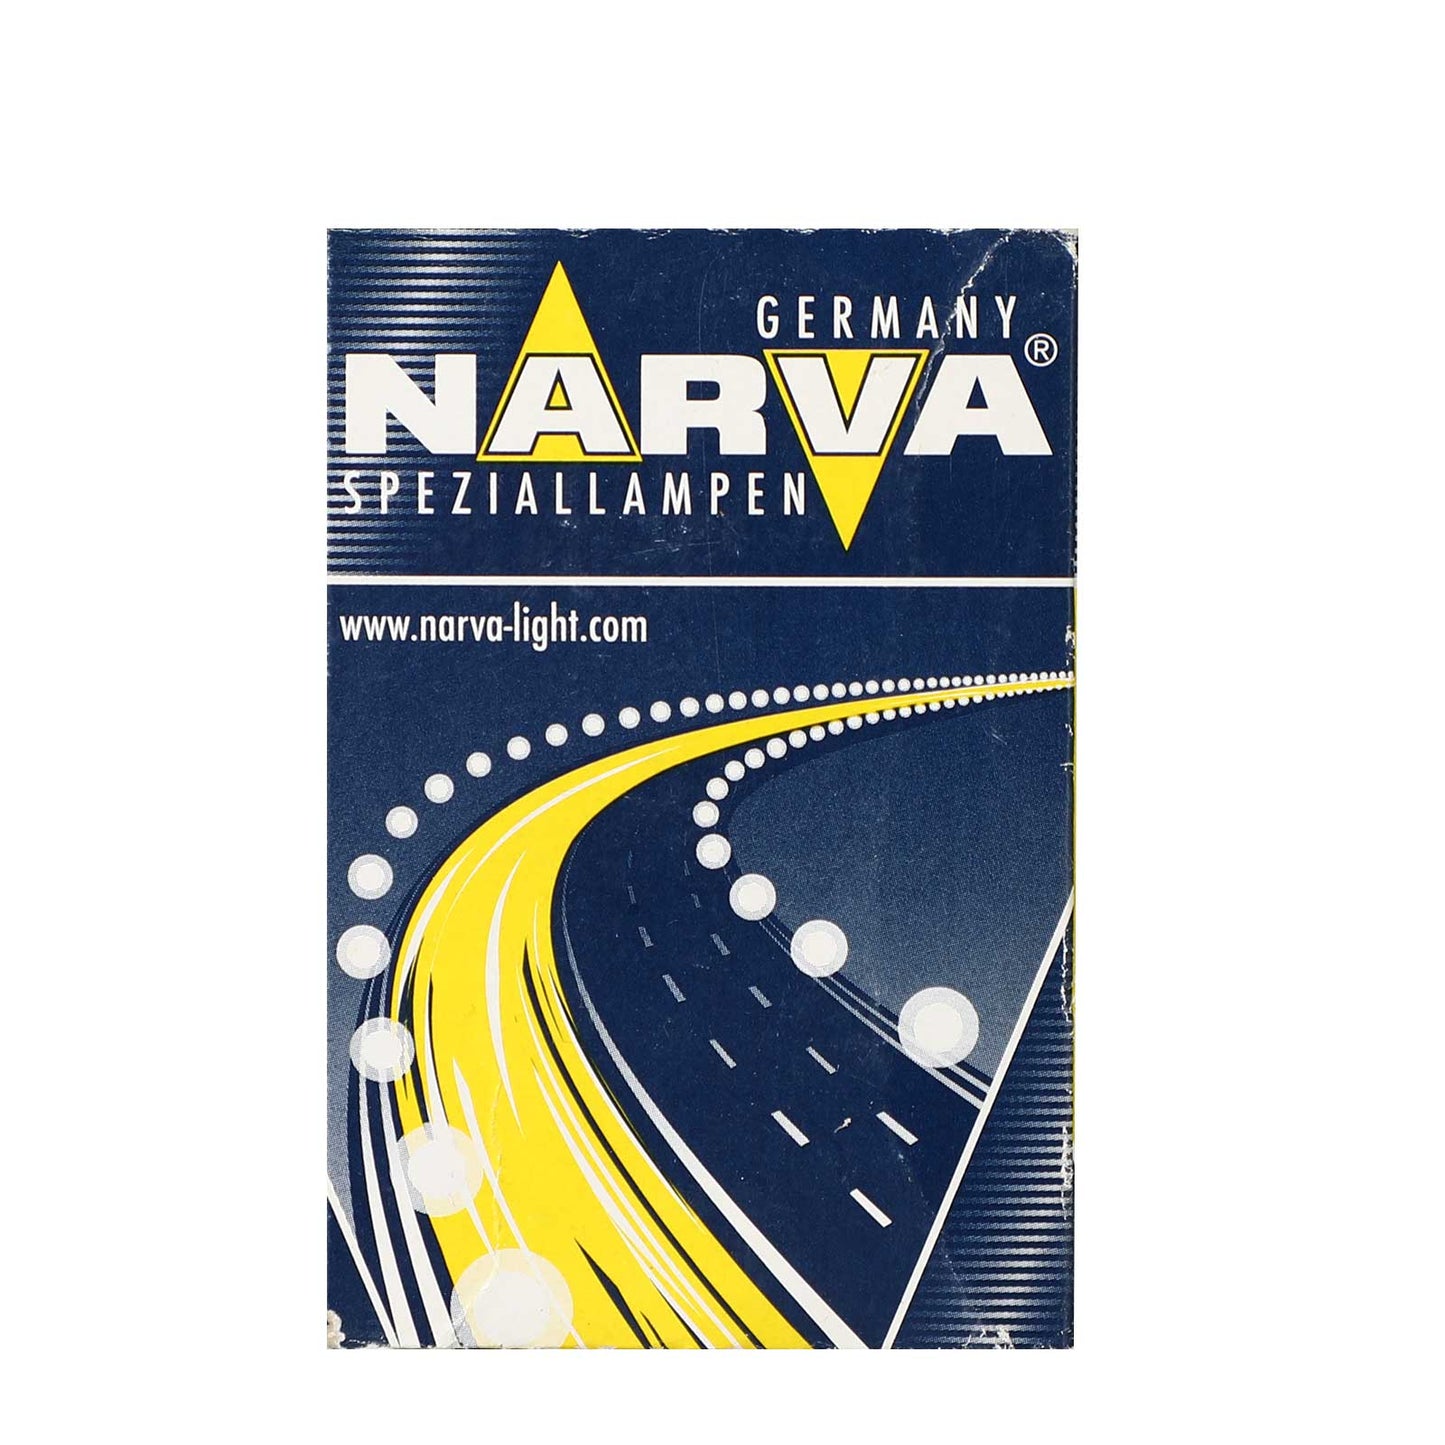 9006/HB4 For NARVA 48026 Halogen Car Headlight Lamp 12V70W P22d